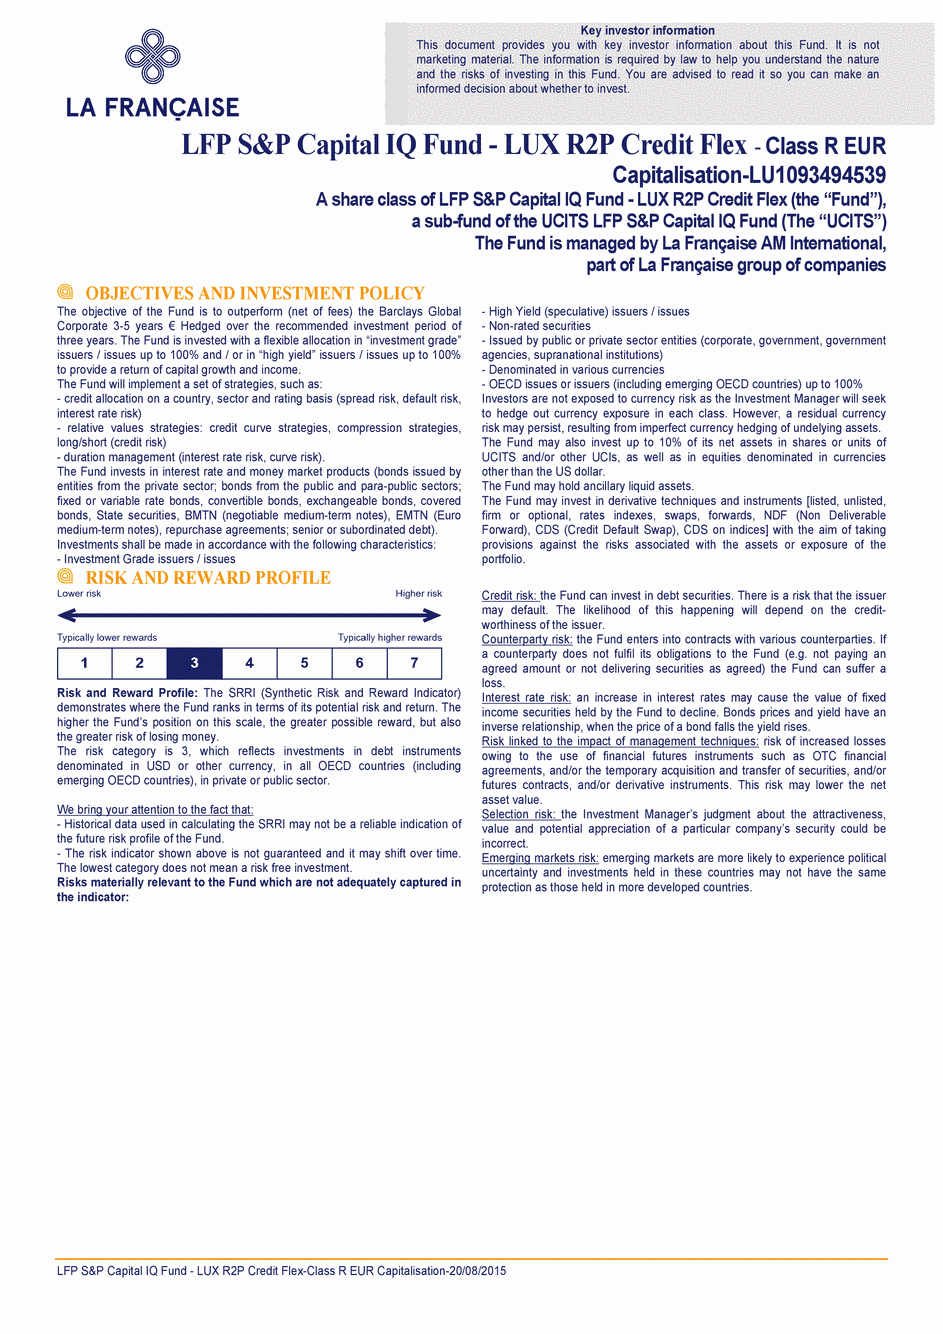 DICI LFP S&P Capital IQ Fund - LUX R2P Credit Flex R CAP EUR - 20/08/2015 - Anglais